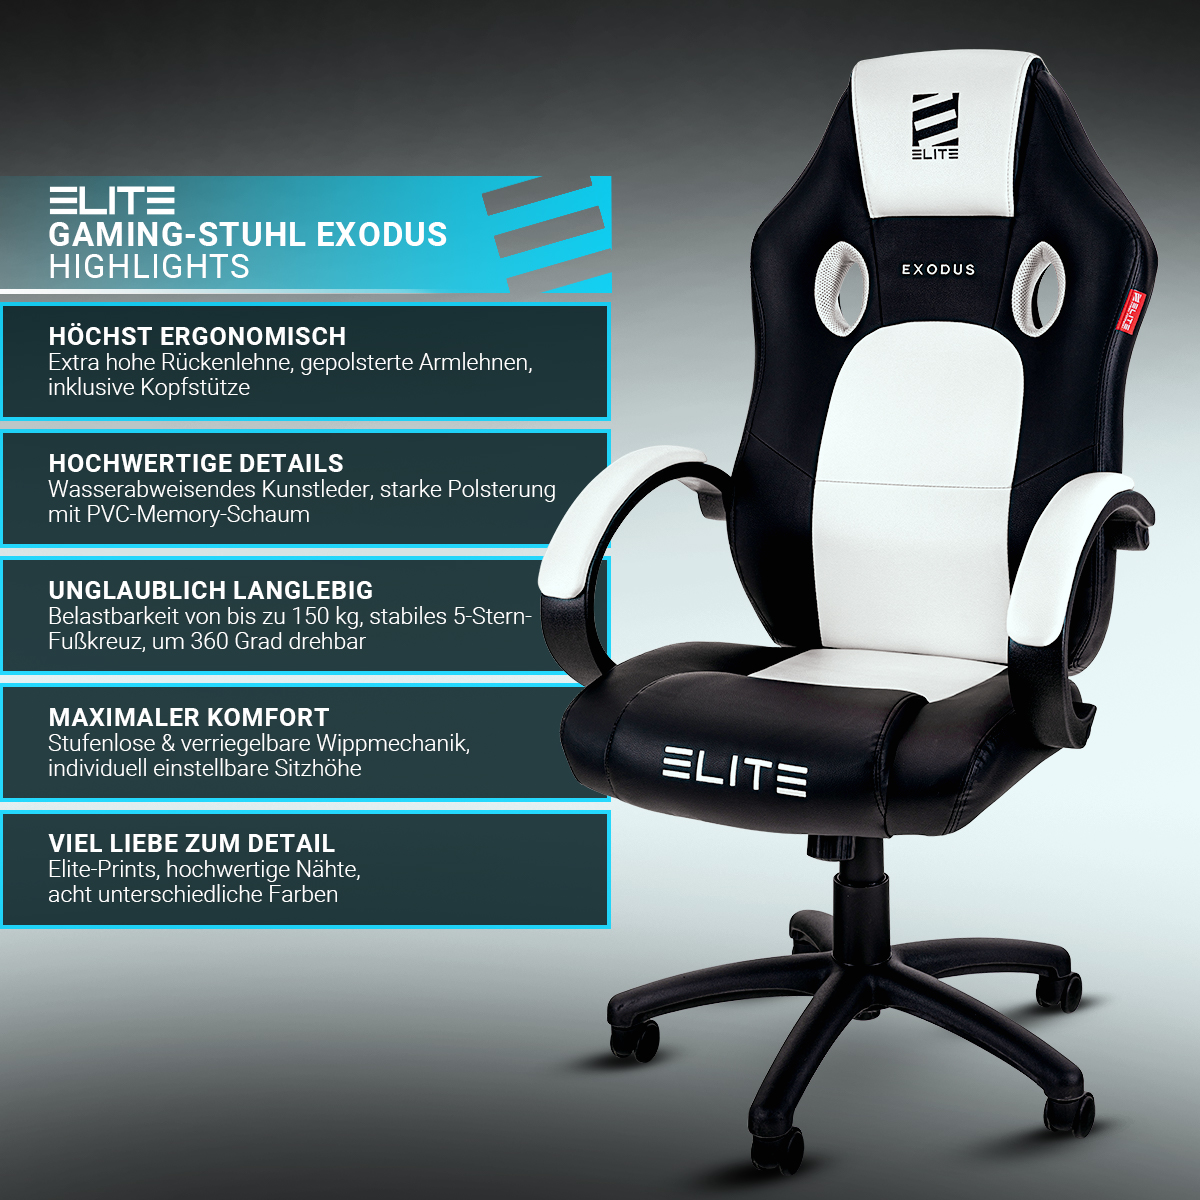 ELITE EXODUS, Memory-Schaum, extra Gaming MG100 Stuhl, Wippmechanik, hohe Weiß/Pink Armpolster, Rückenlehne